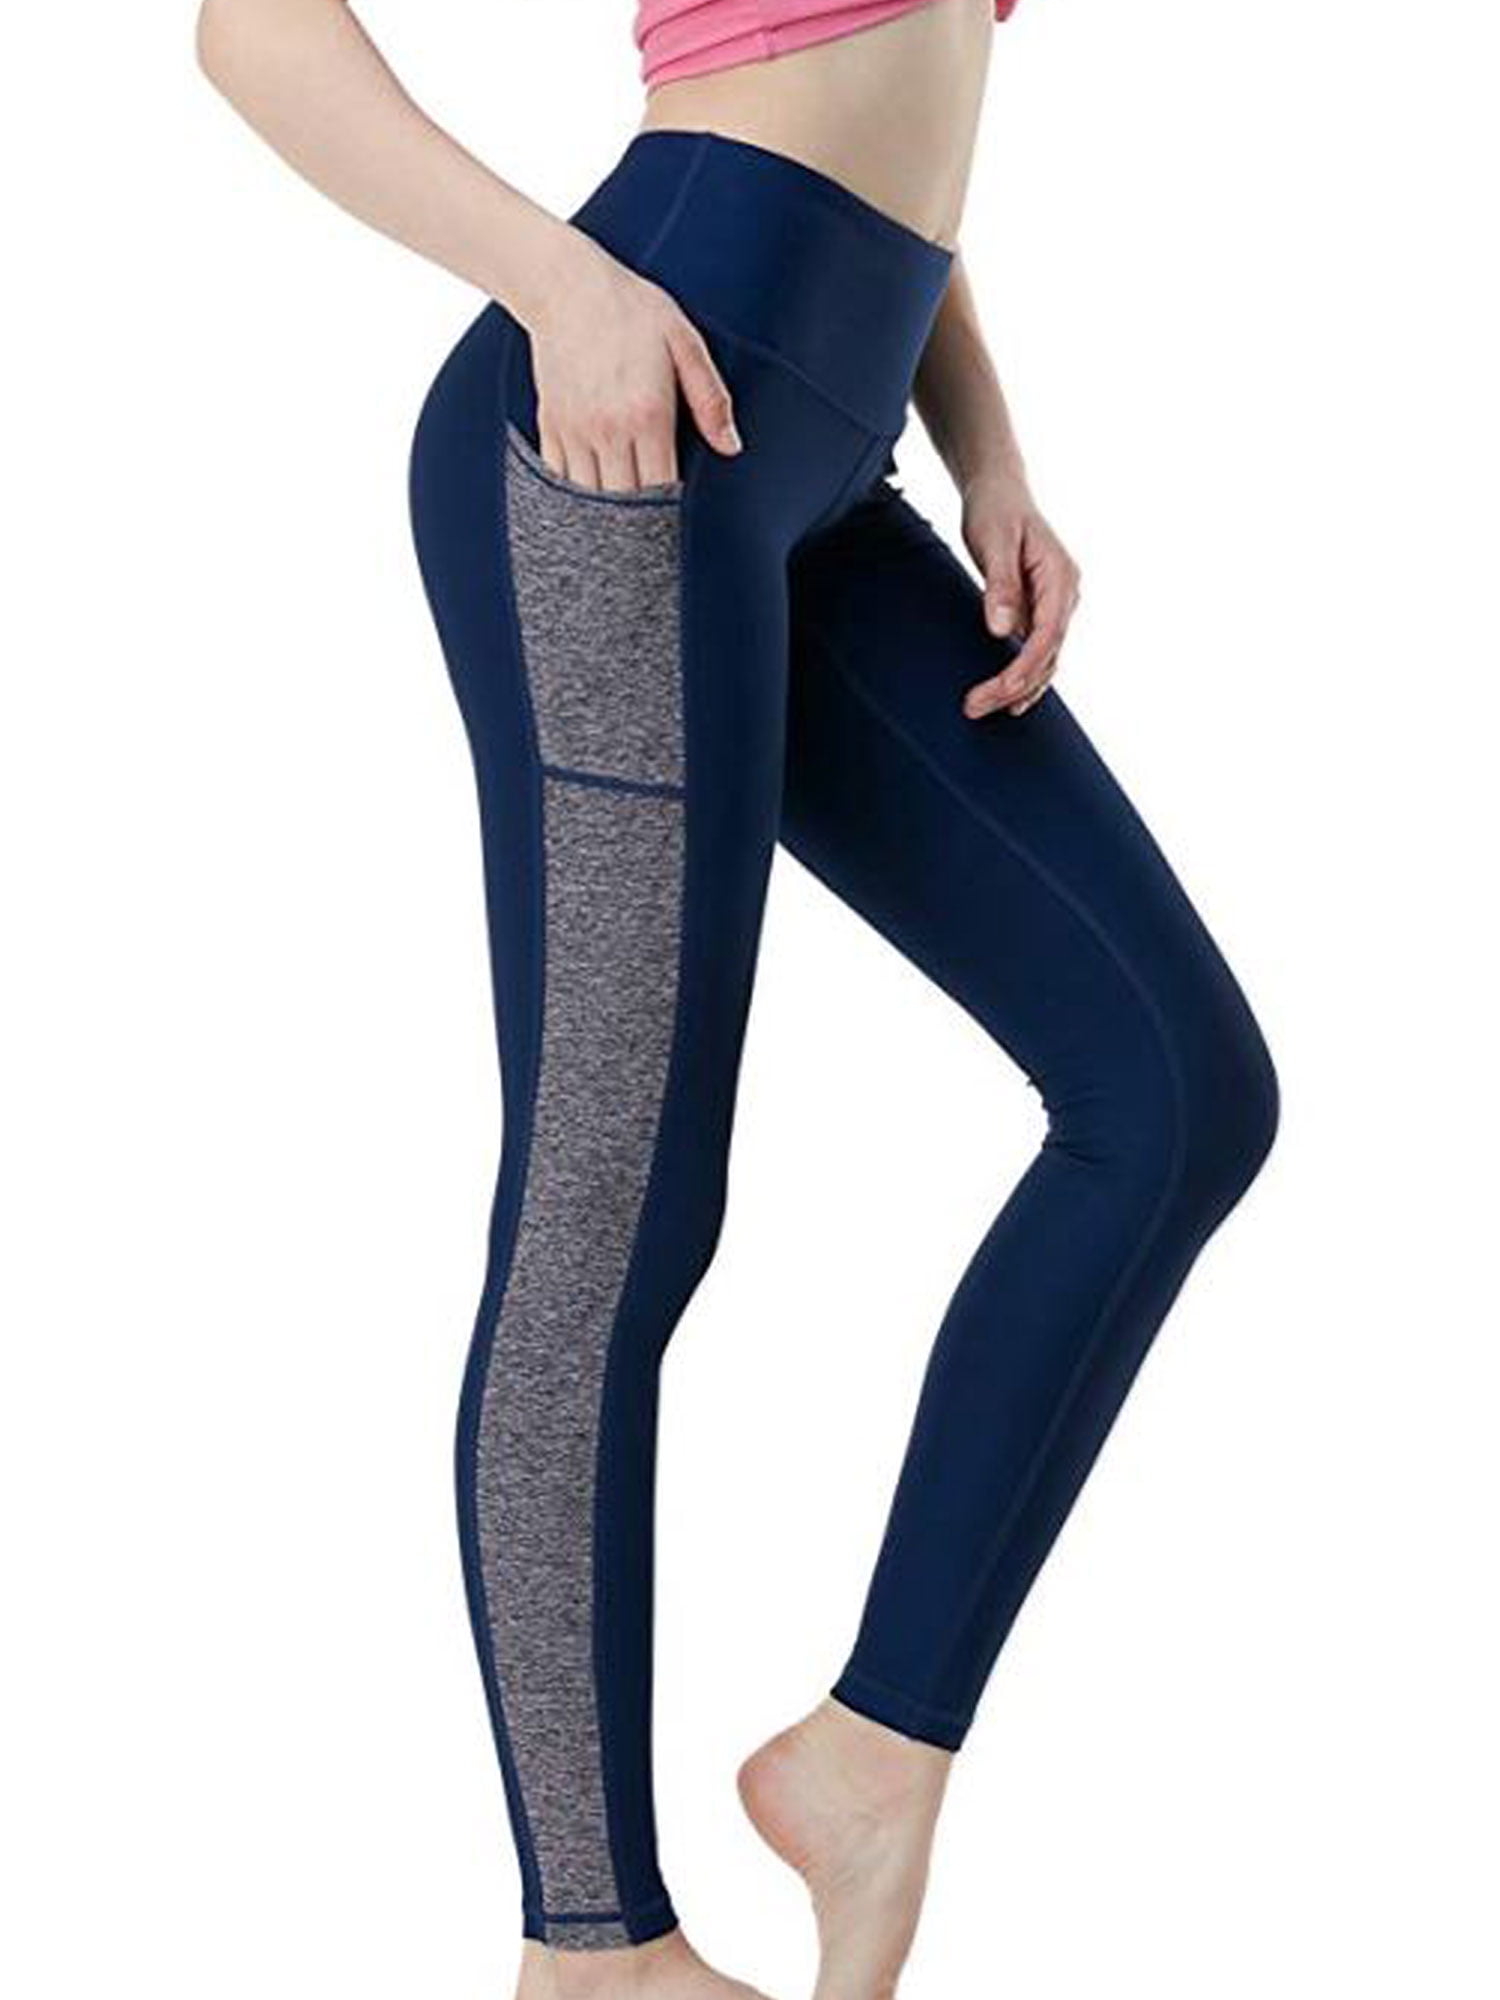 UKAP - Comfy Sports Leggings Trouser Pants With Pocket For Women Jogger ...